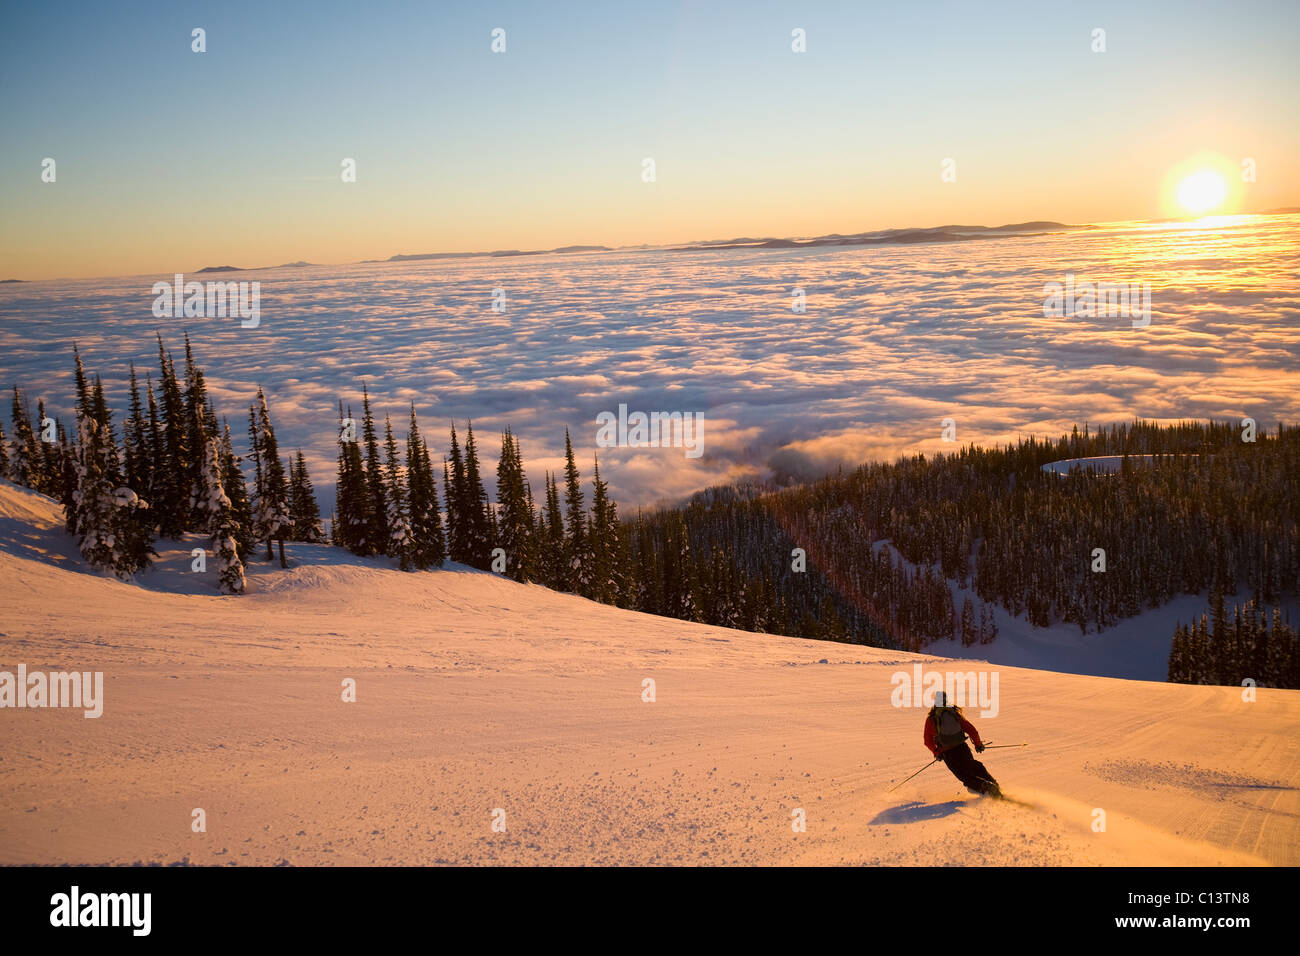 USA, Montana, Whitefish, Mid adult woman skiing Stock Photo